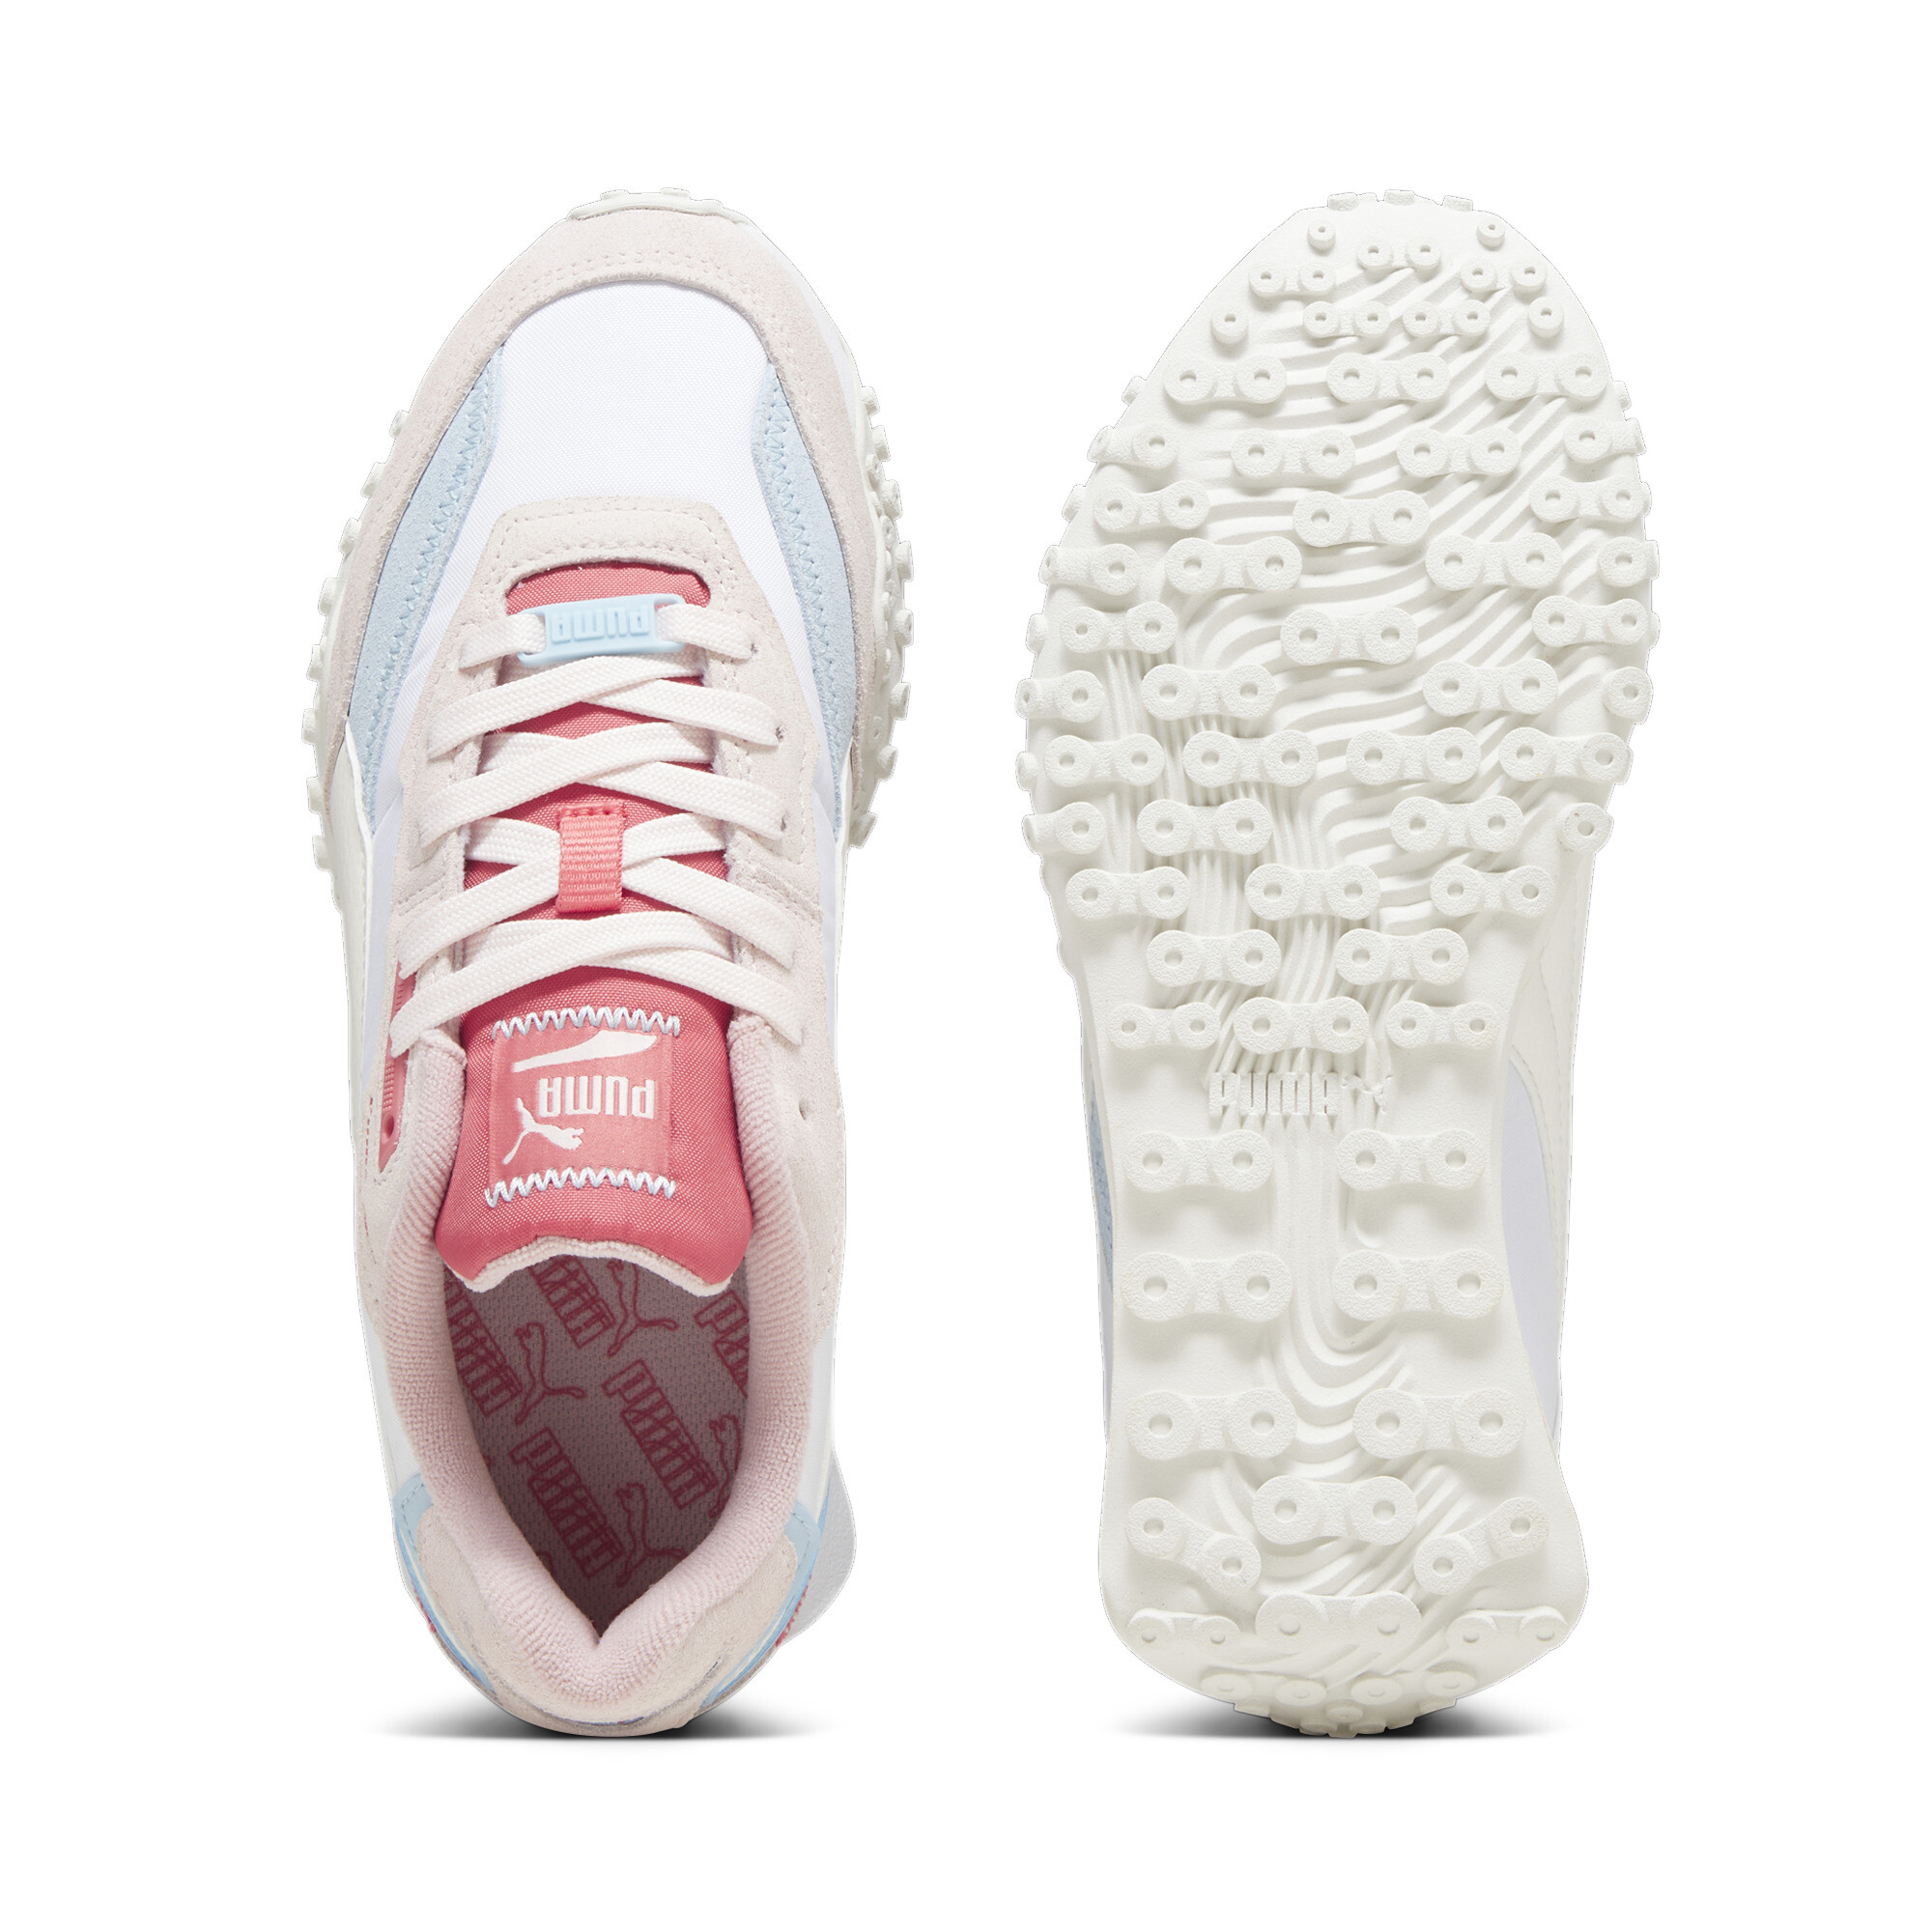 Men's PUMA Blktop Rider Sneakers In White/Pink, Size EU 38.5